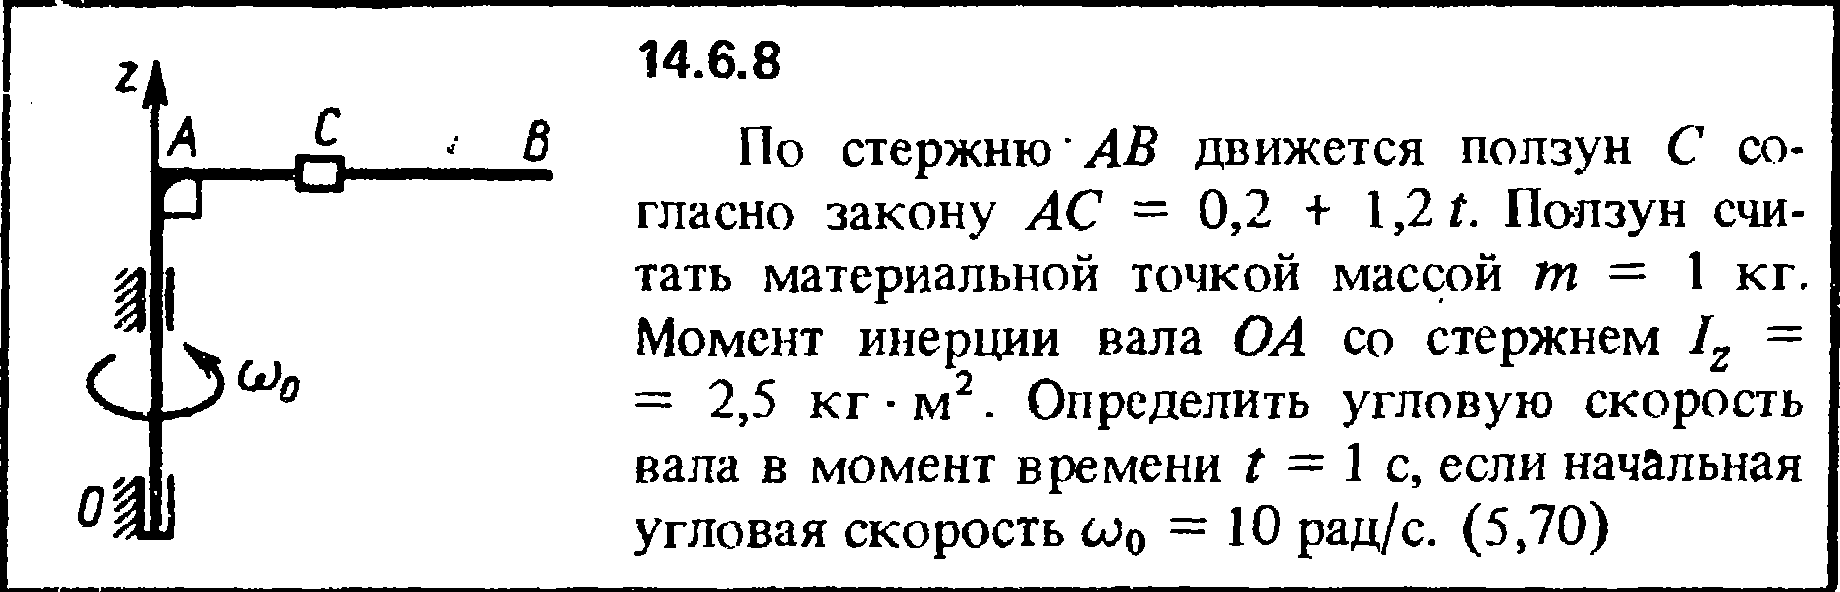 Решение задачи 14.6.8 из сборника Кепе О.Е. 1989 года